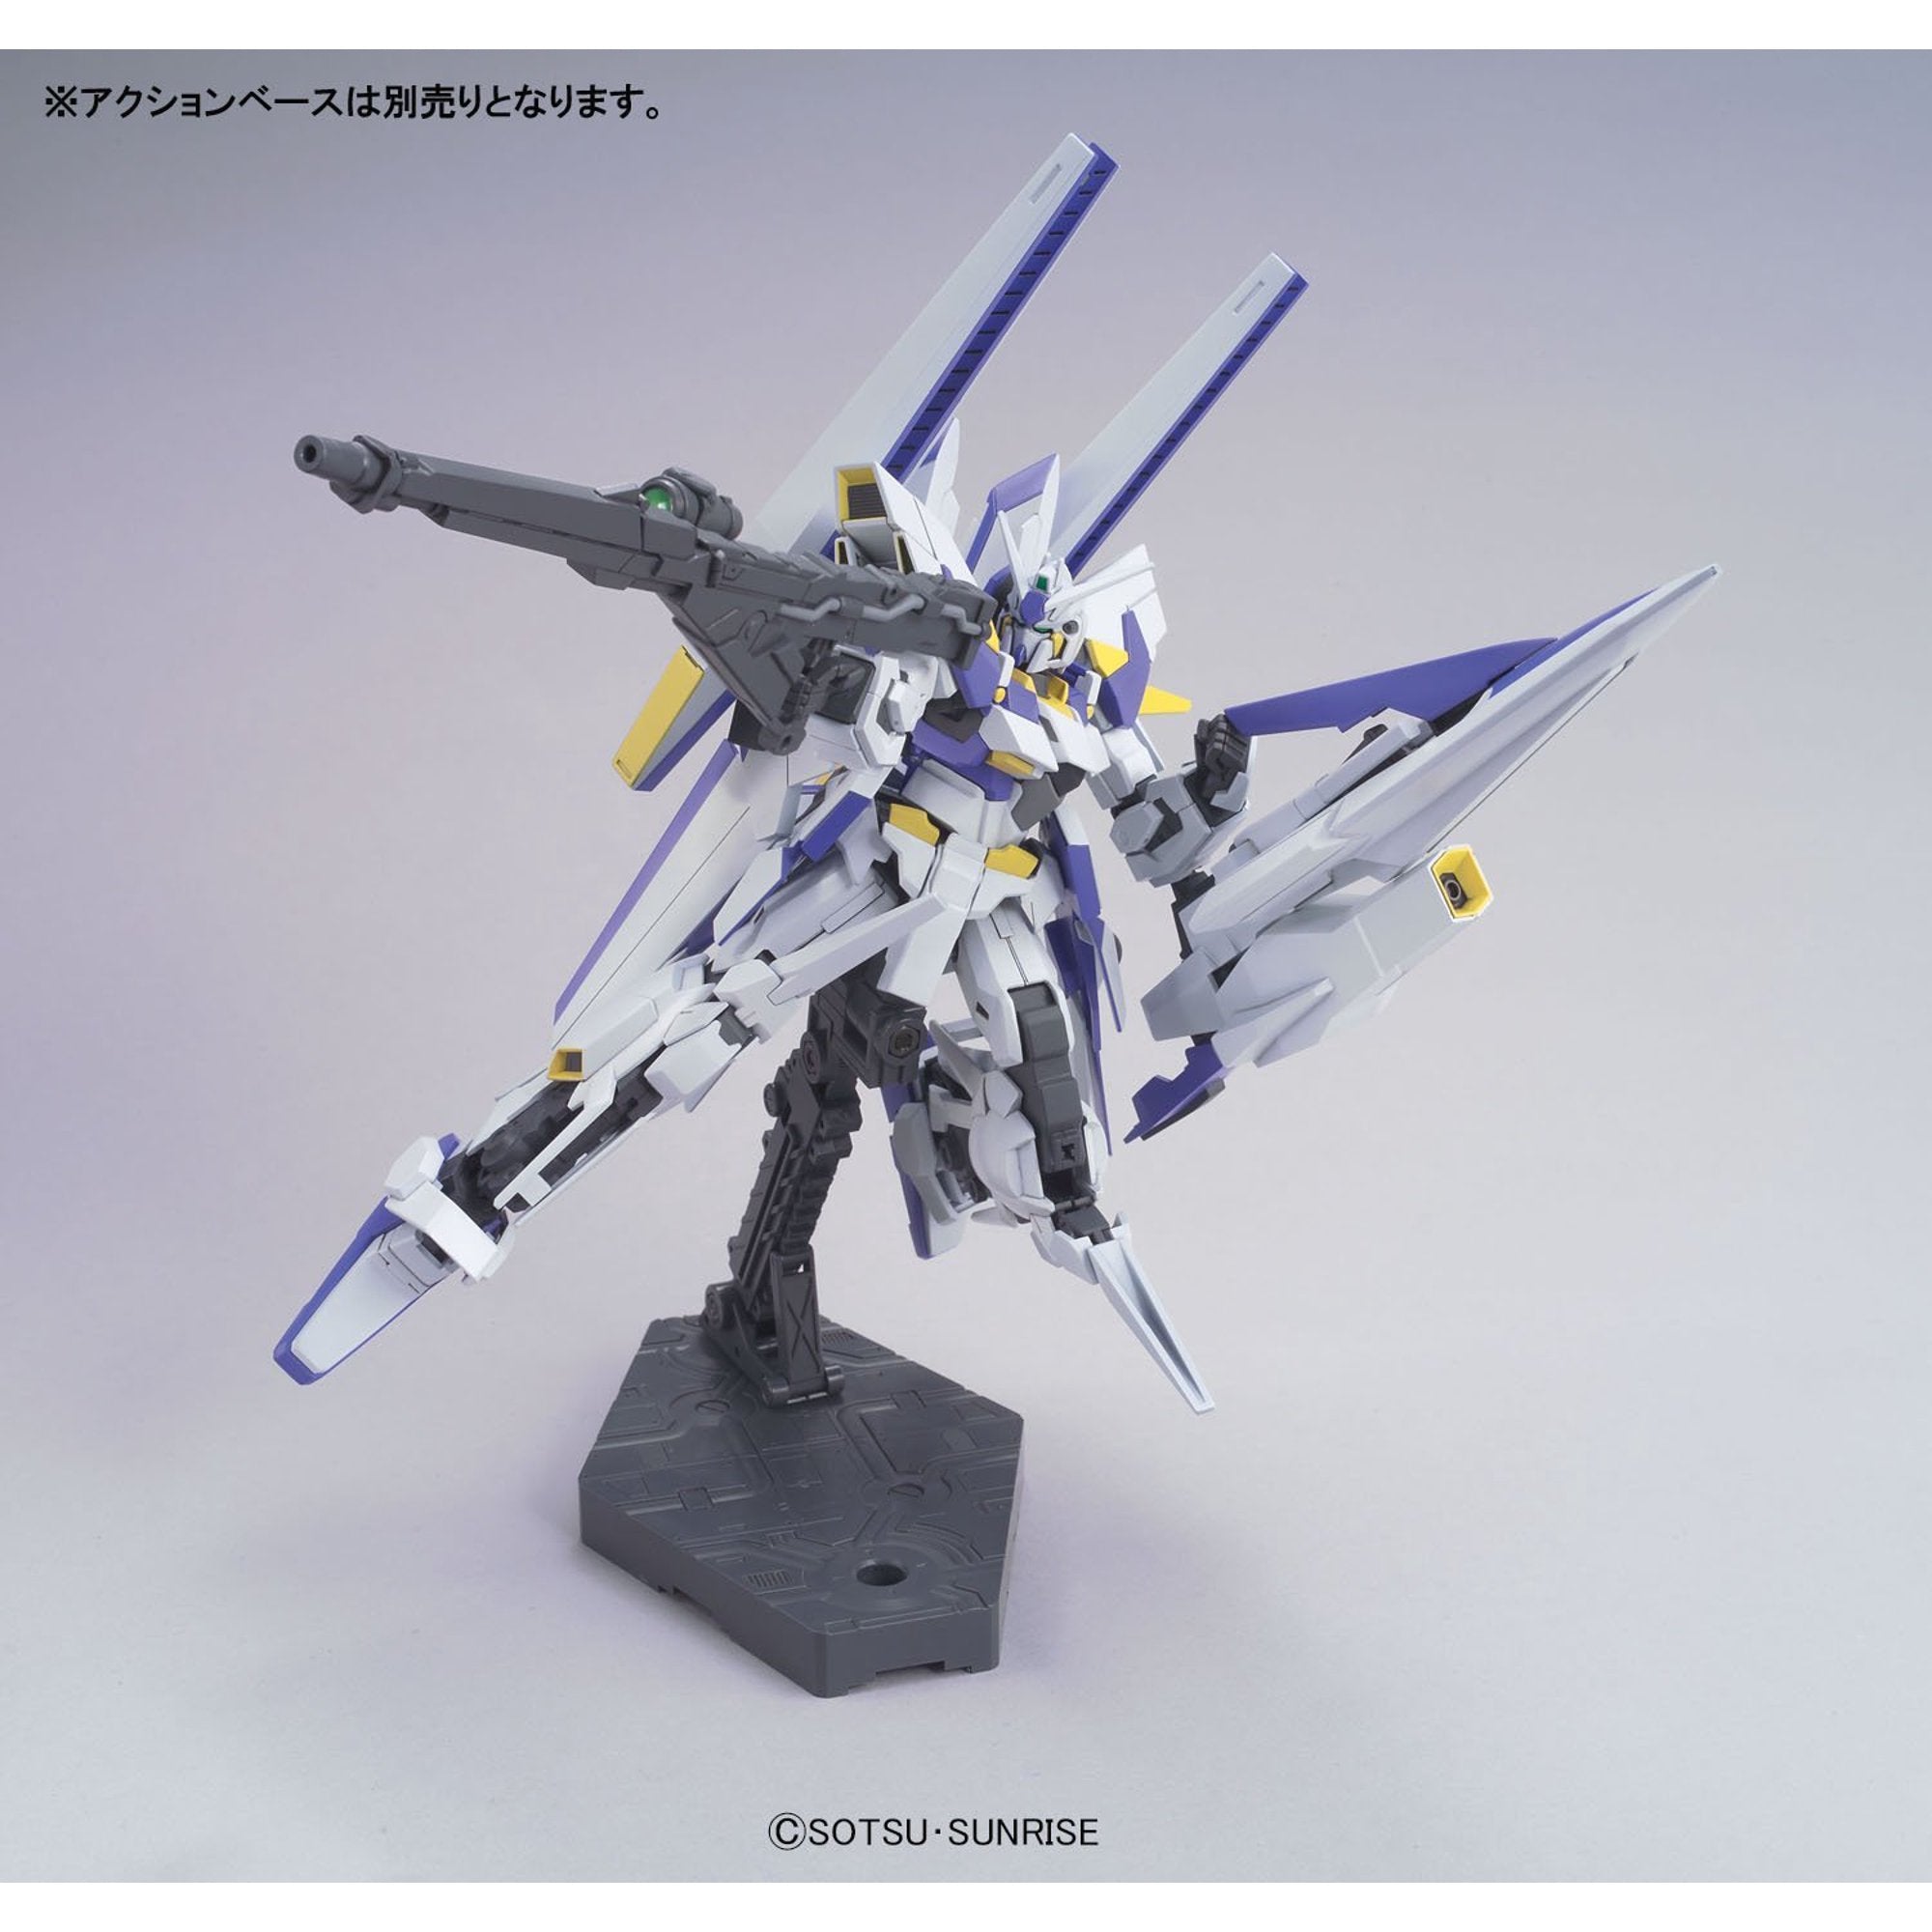 Bandai HGUC 148 Gundam Delta Kai E.F.S.F. Transformable Mobile Suit Prototype - Bards & Cards